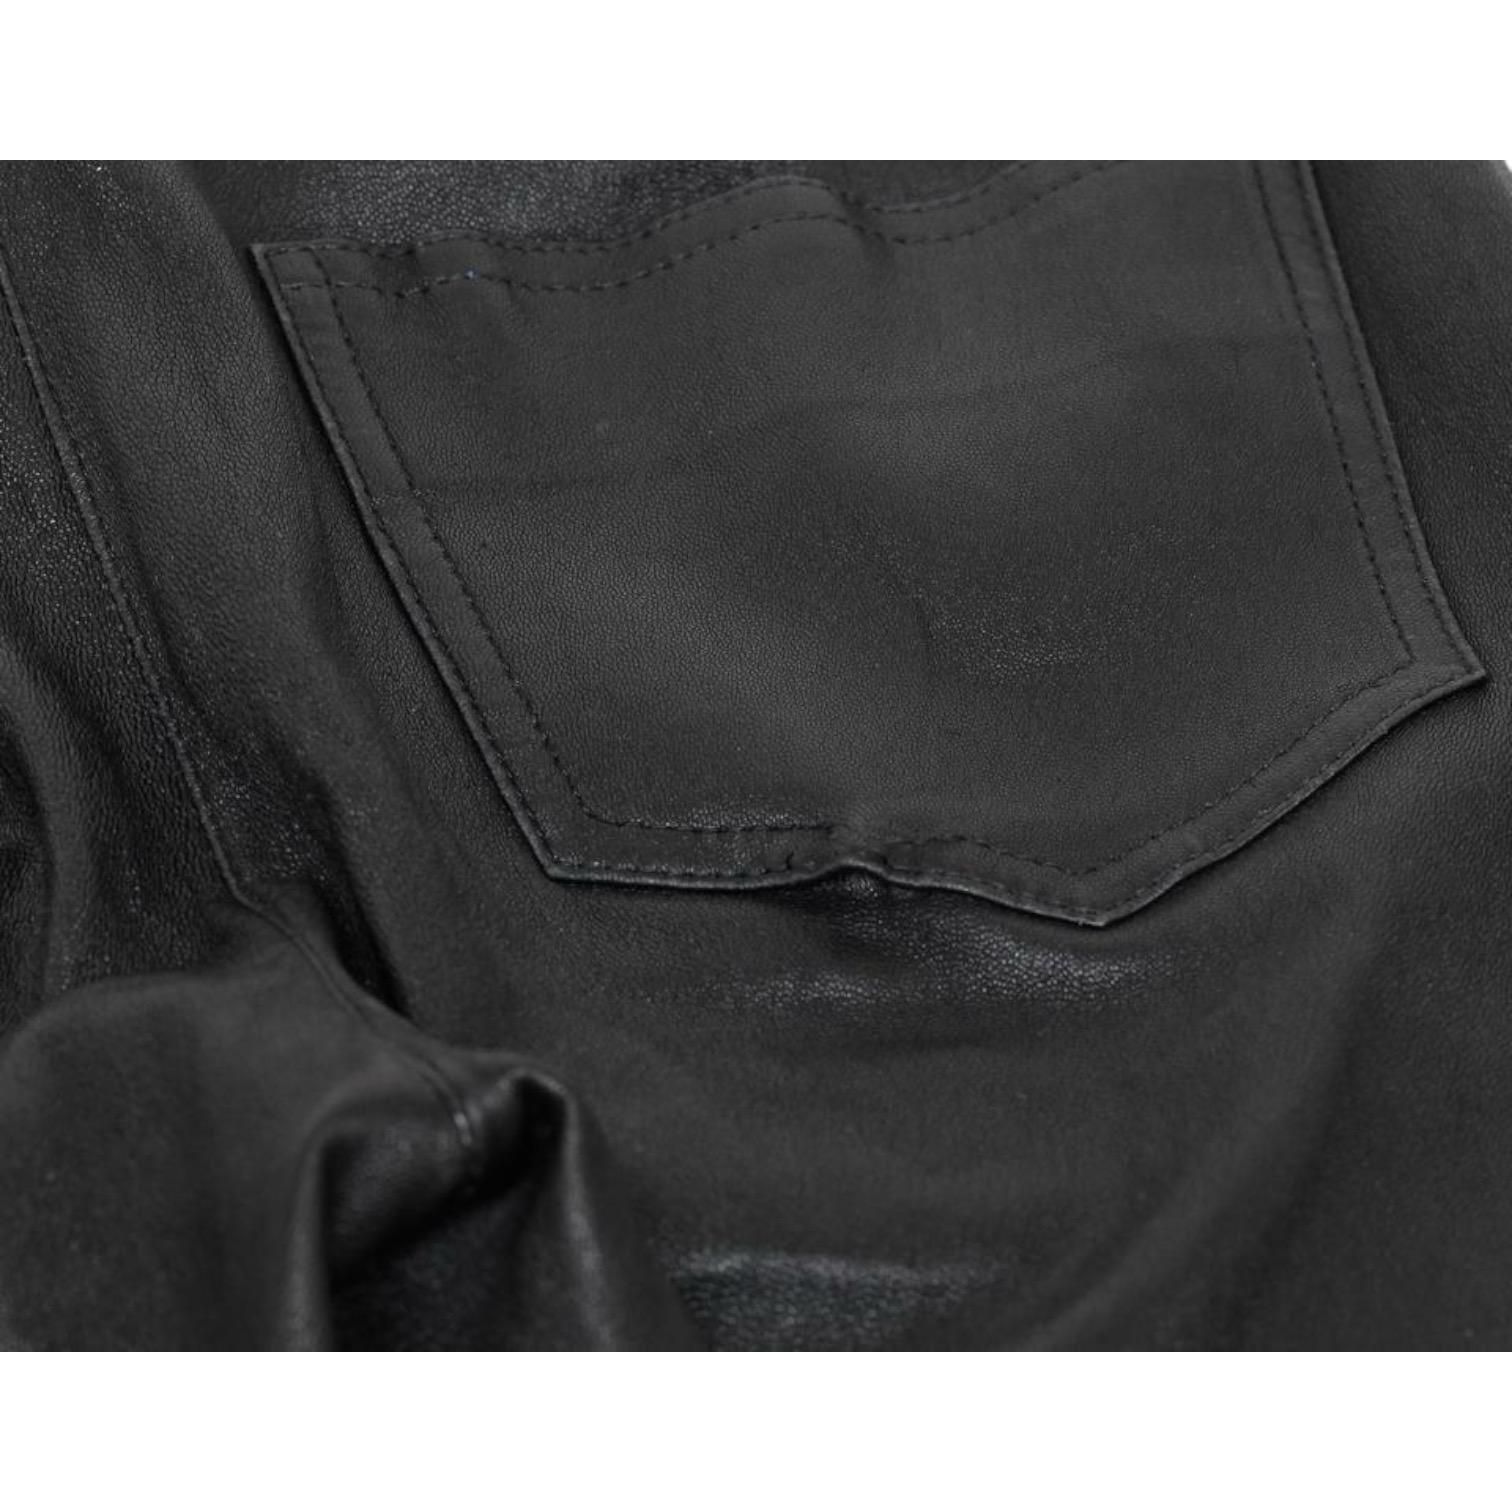 GIVENCHY Black Leather Pant Jean Mid-Rise Skinny Leg Zipper Sz M For Sale 3